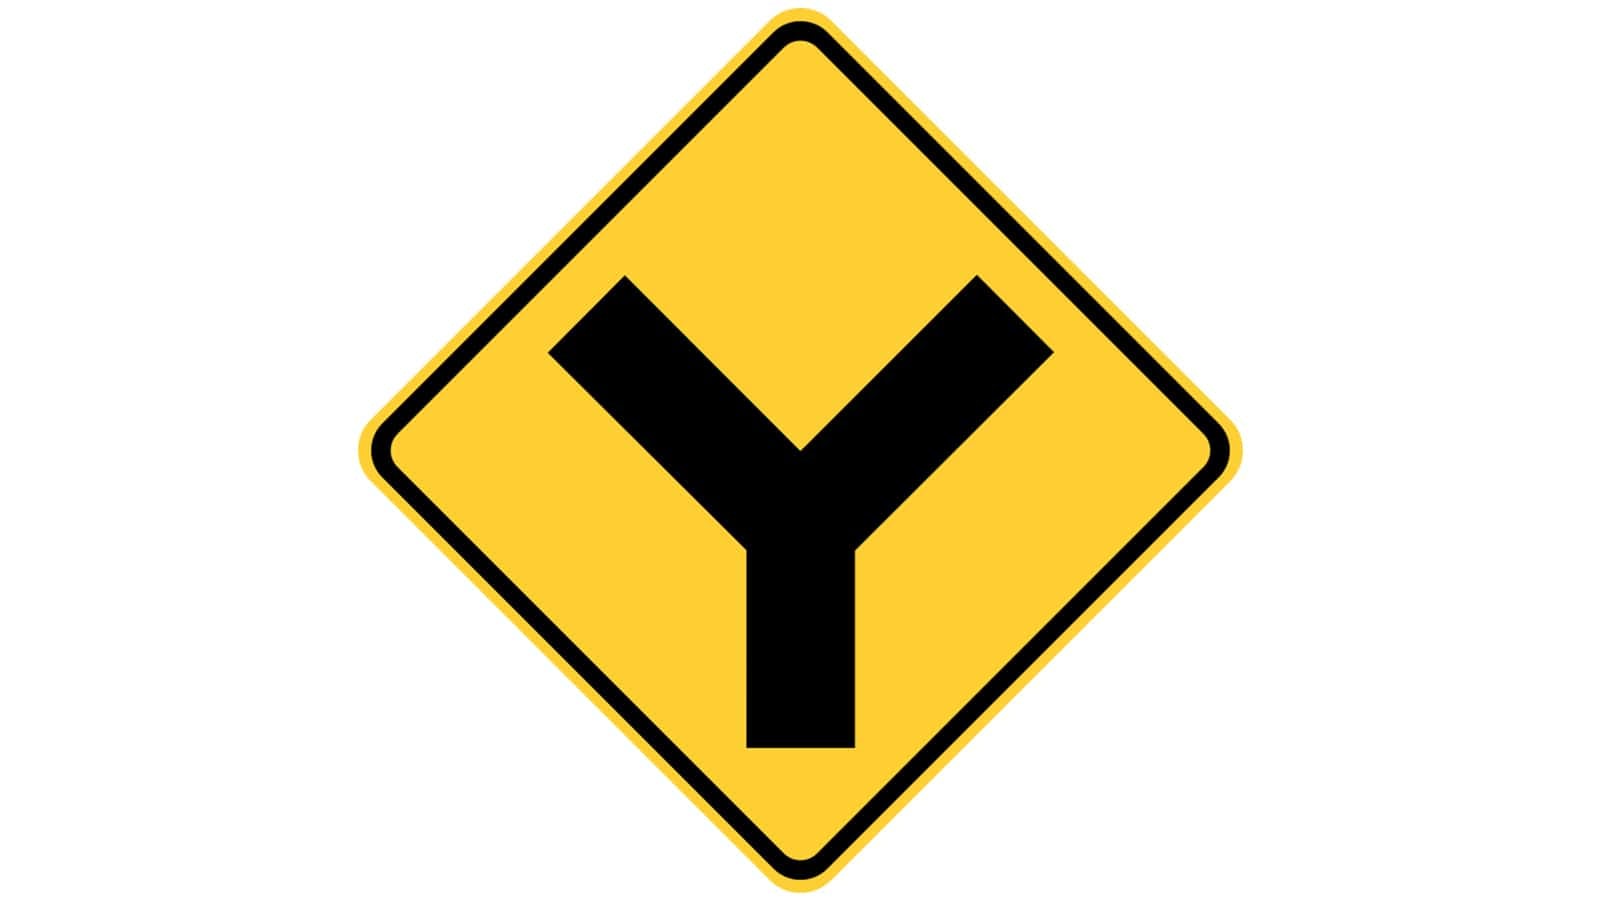 Warning sign Y-Roads